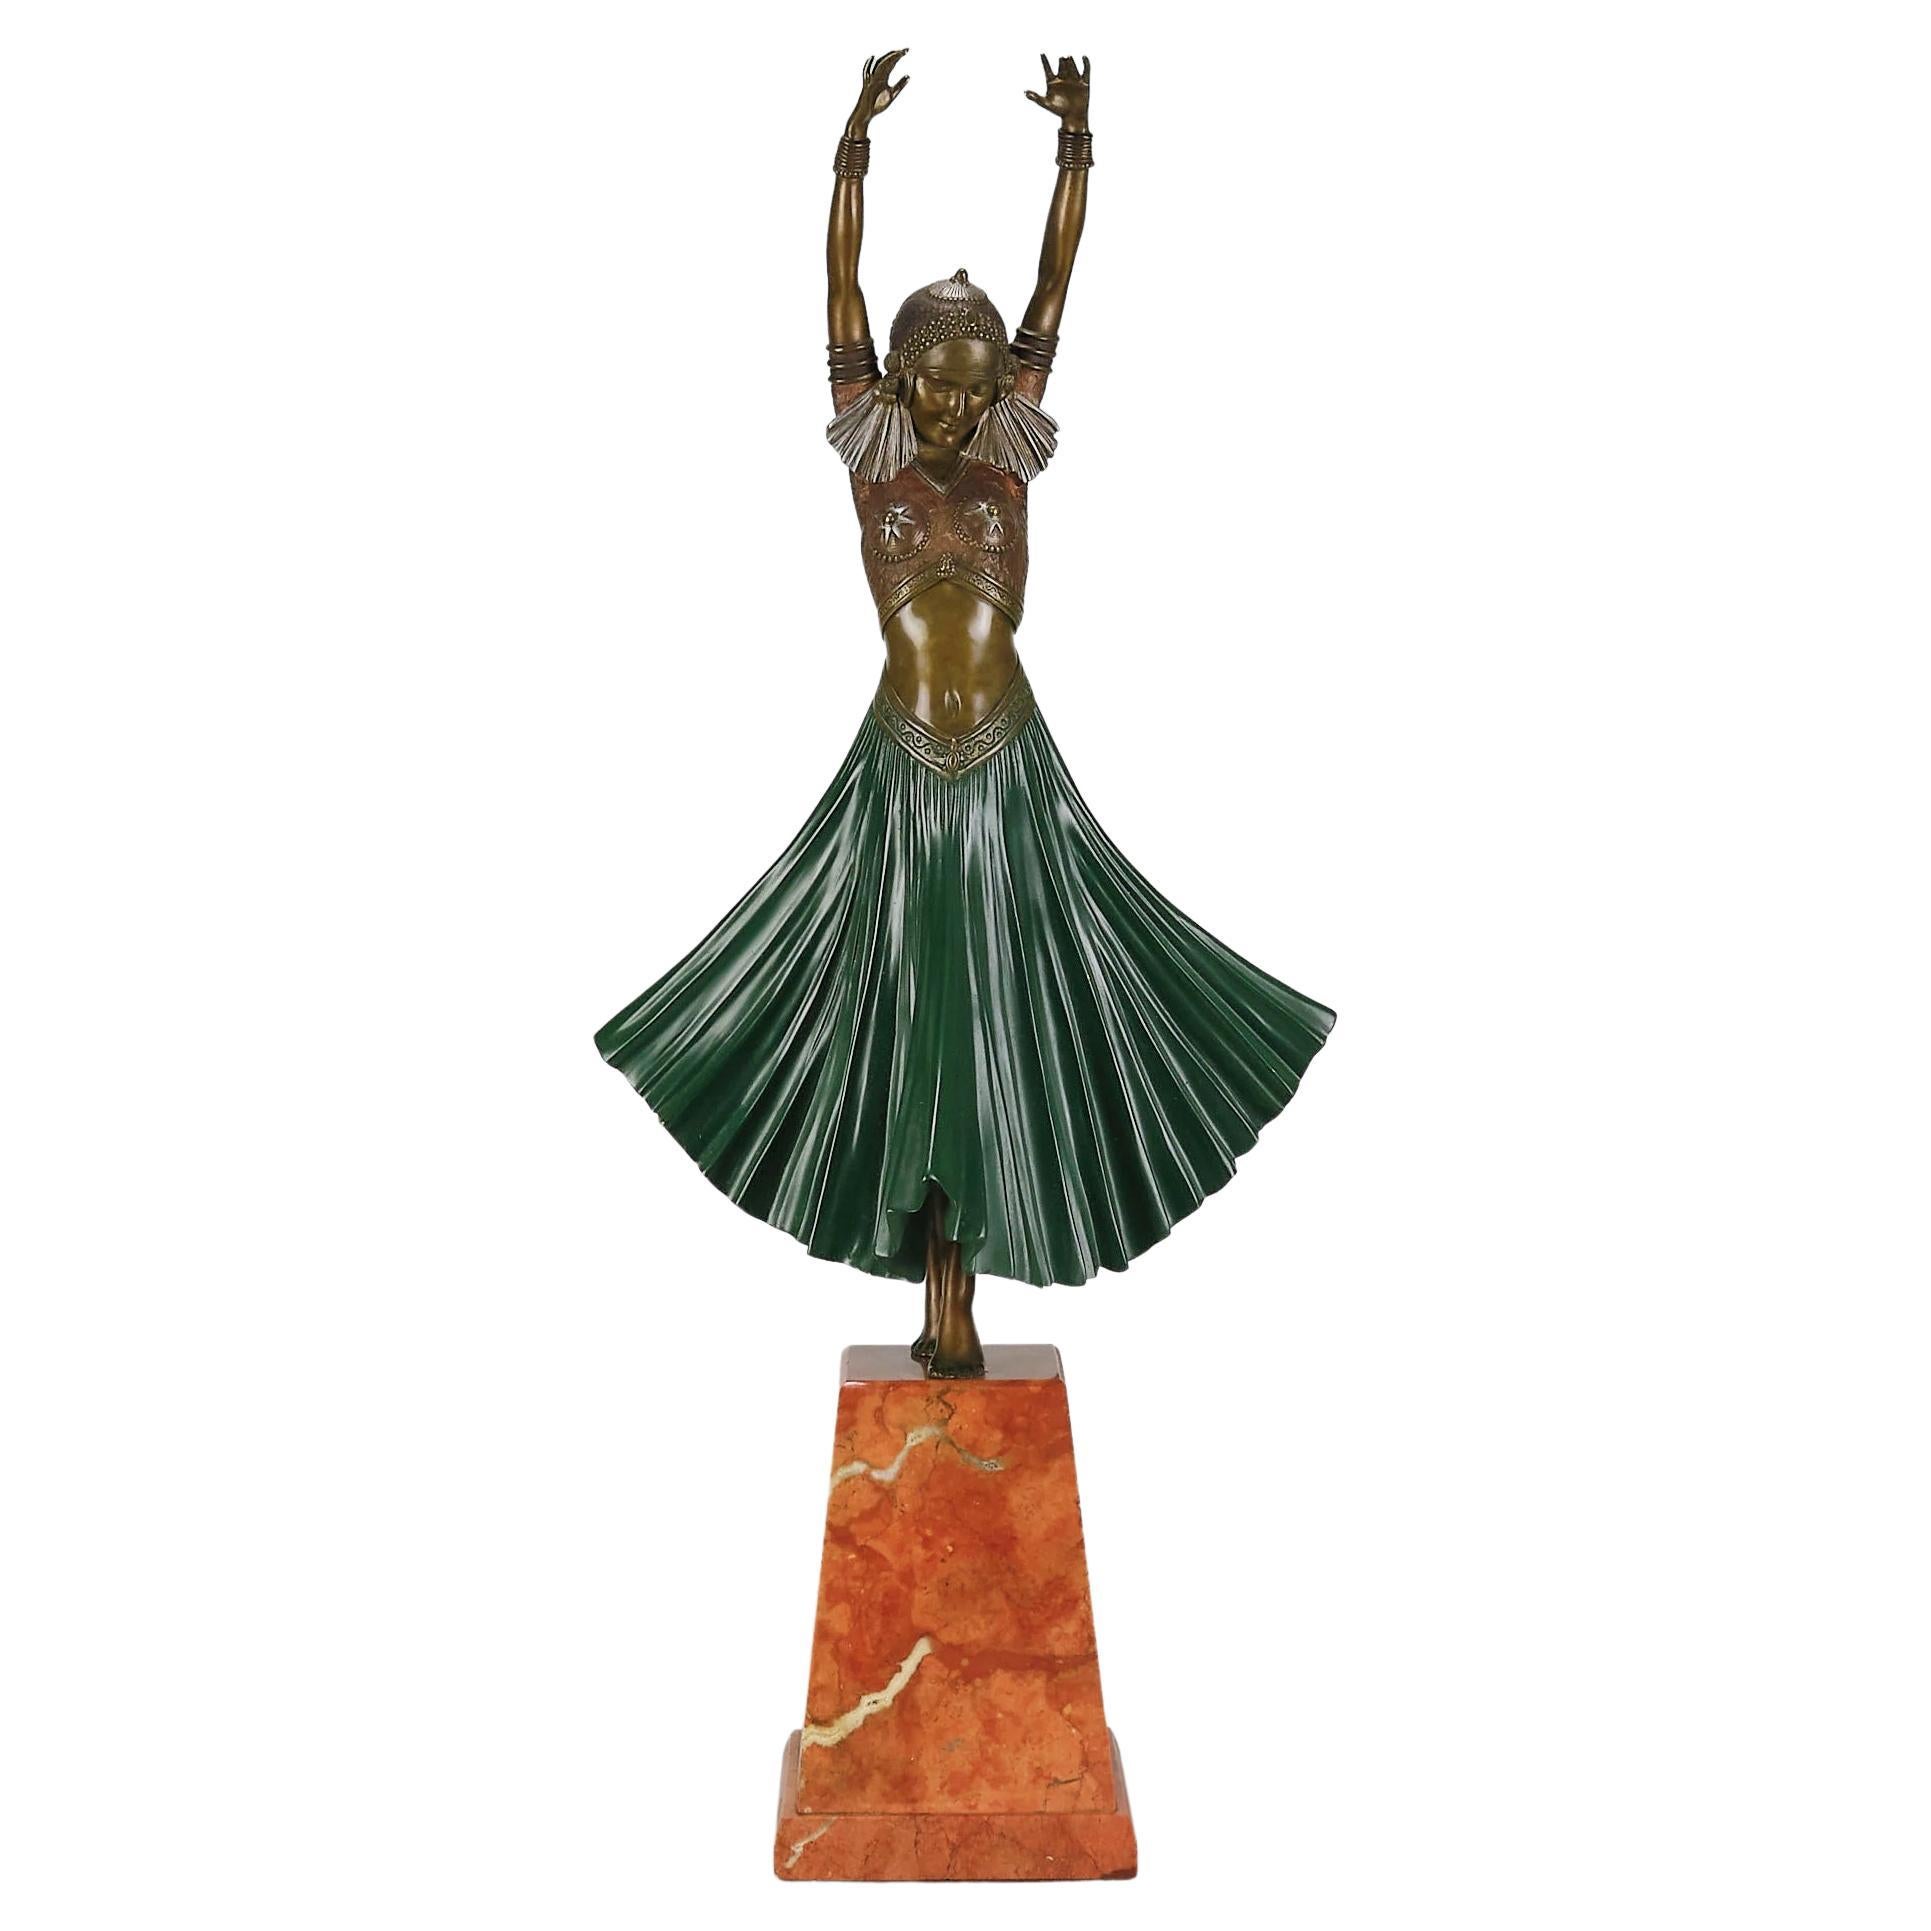 20th Century Art Deco Bronze Entitled "Hindu Dancer" by Demetre Chiparus